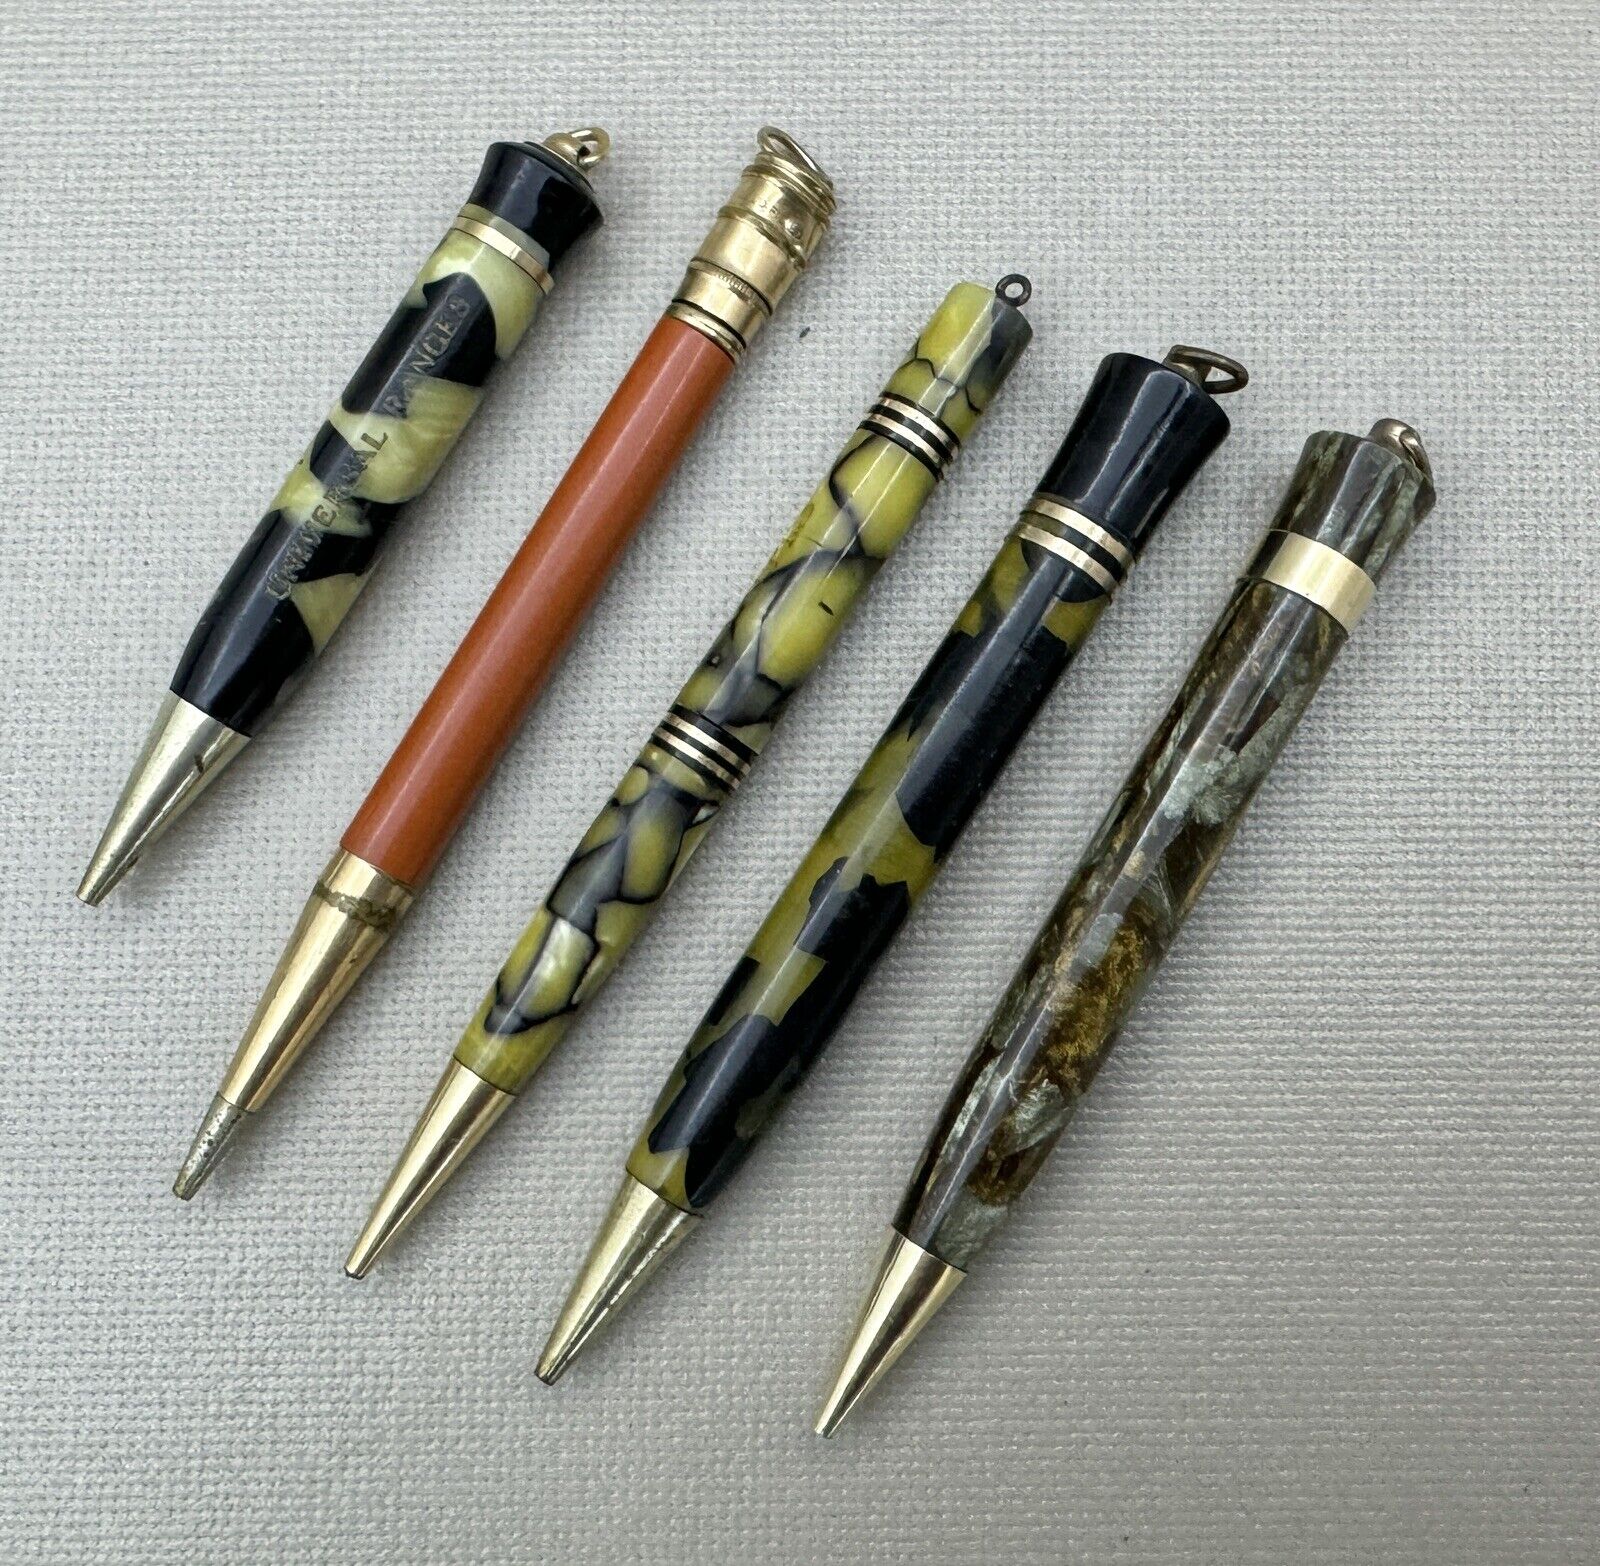 Lot of 5 Quality Ringtop Mechanical Pencils